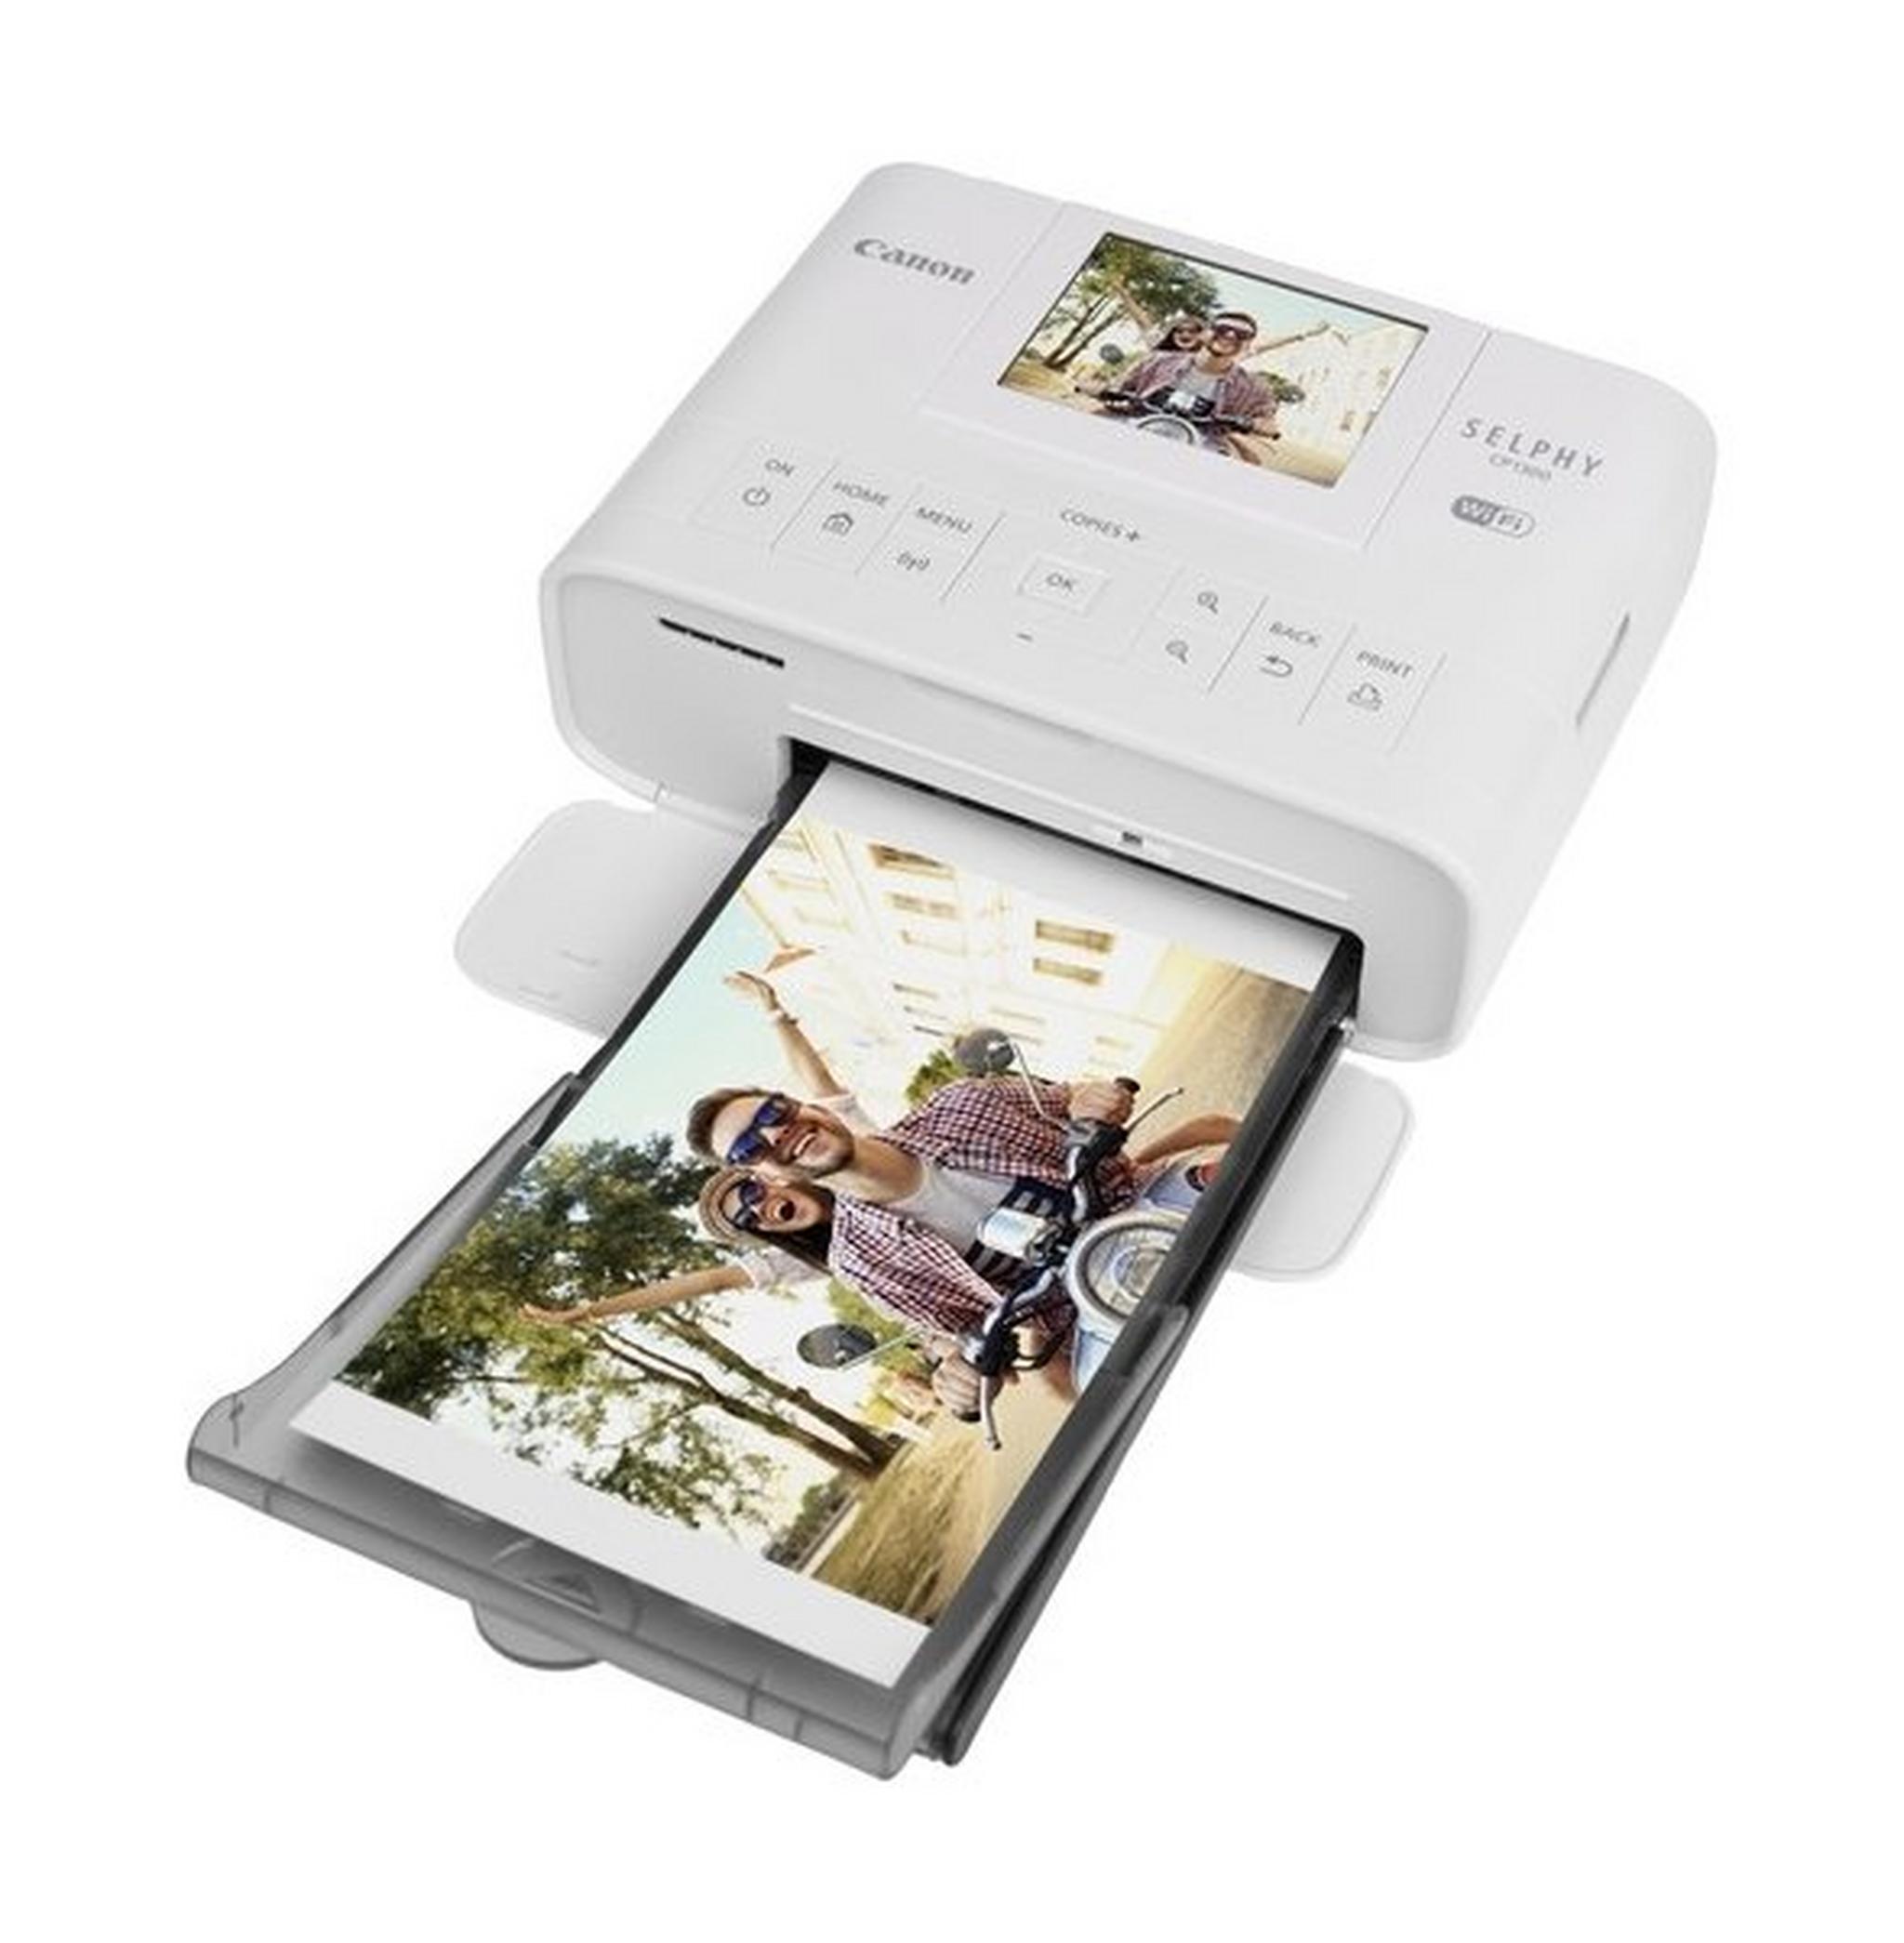 Canon SELPHY CP1300 Compact Photo Printer - White